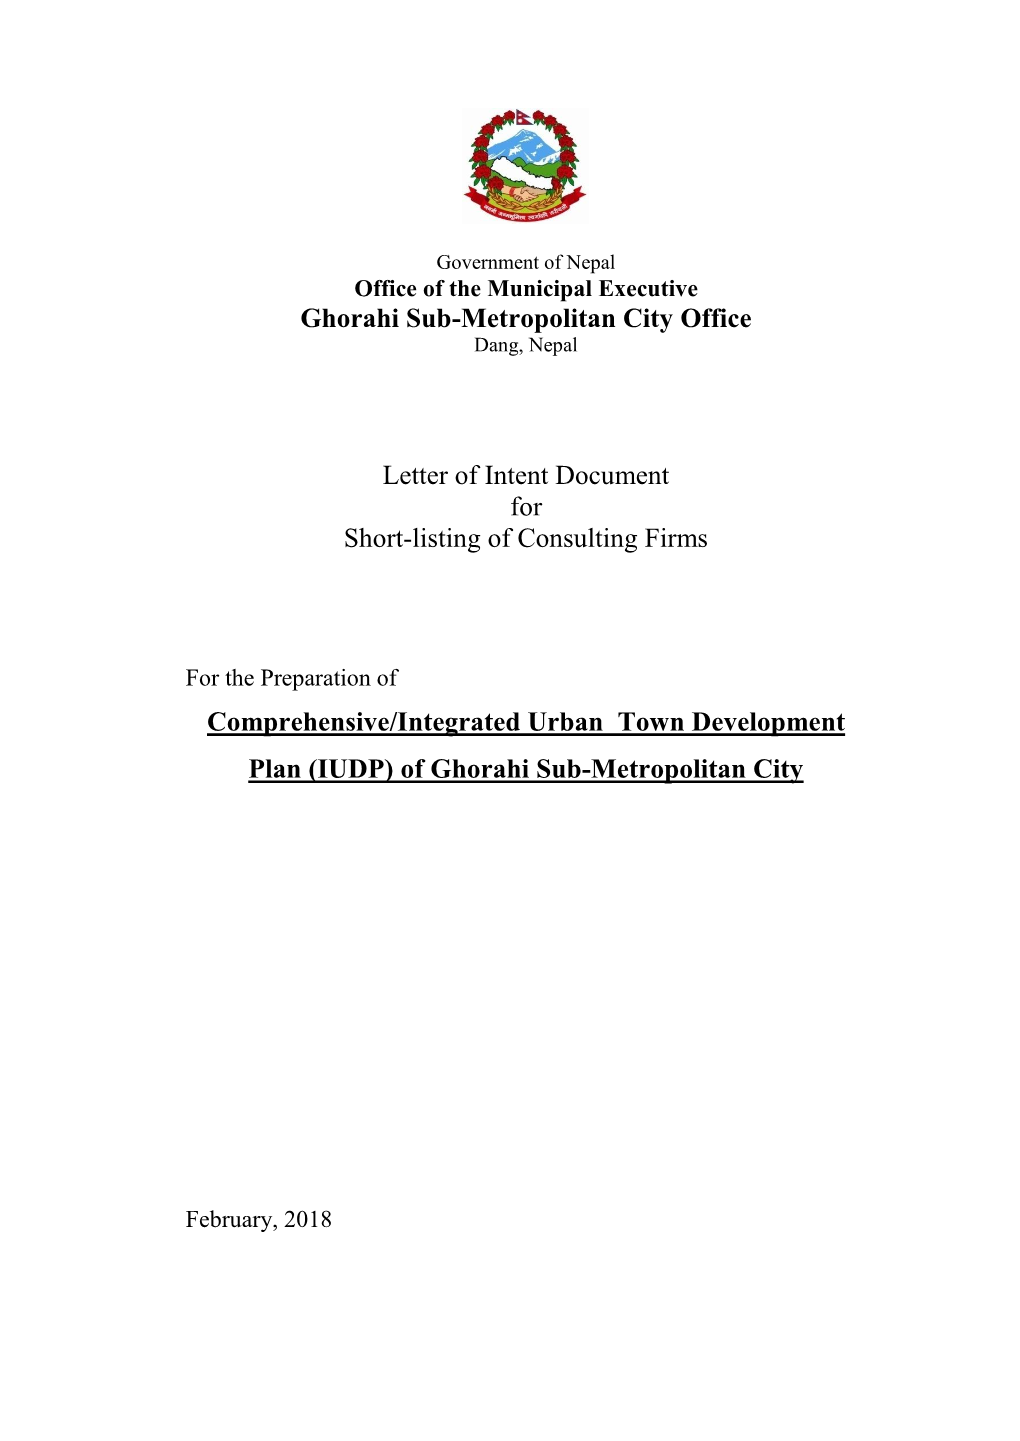 Ghorahi Sub-Metropolitan City Office Letter of Intent Document for Short